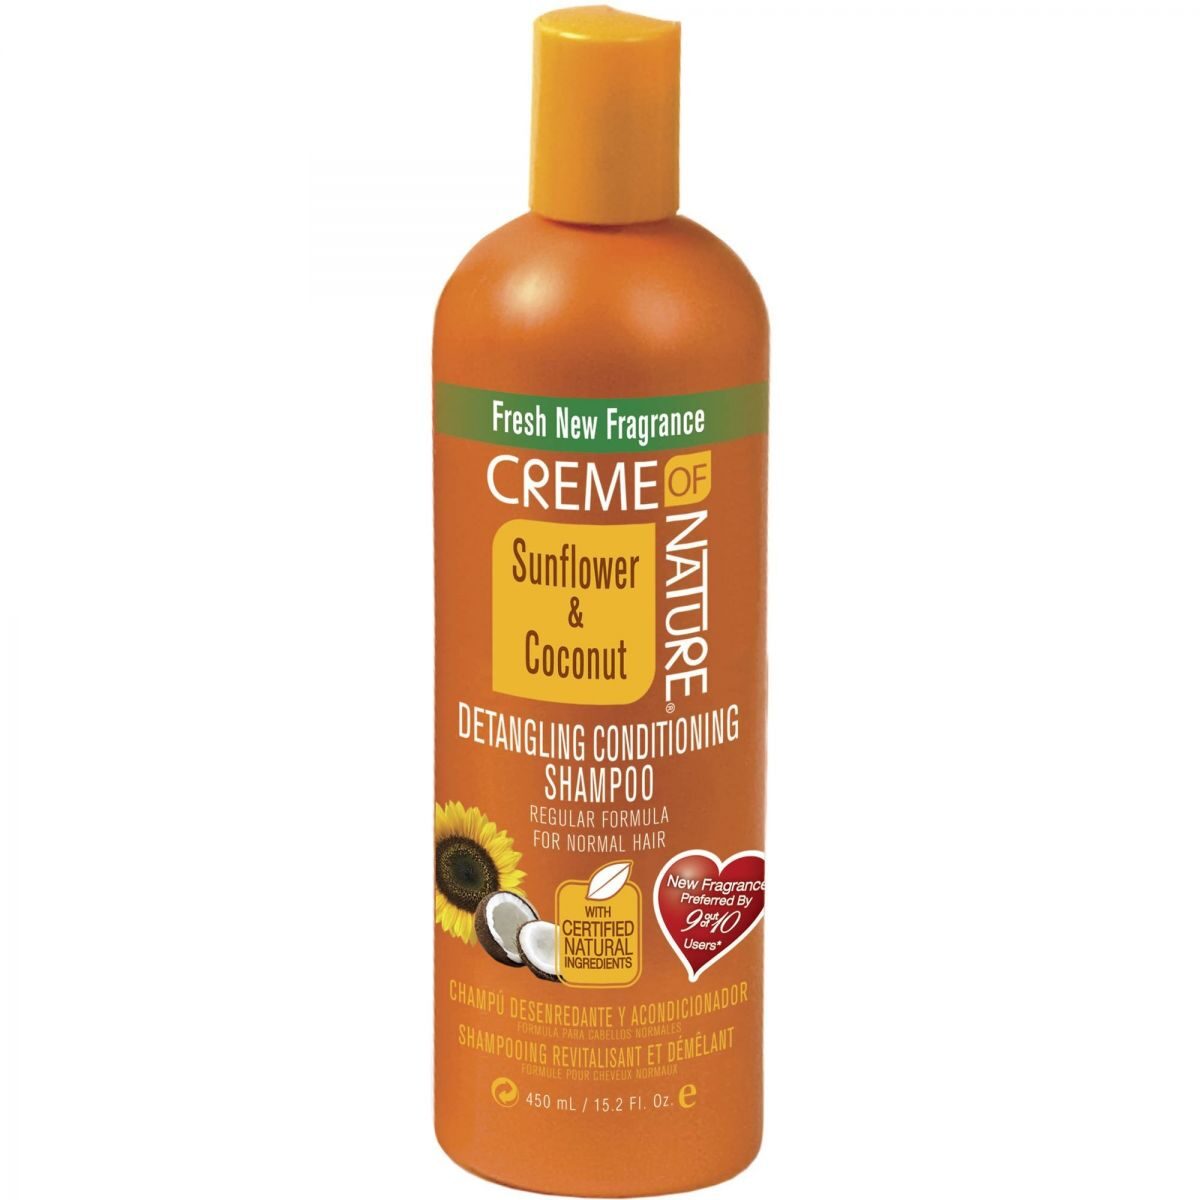 Creme of Nature Sunflower & Coconut Detangling Conditioning Shampoo 32 oz 